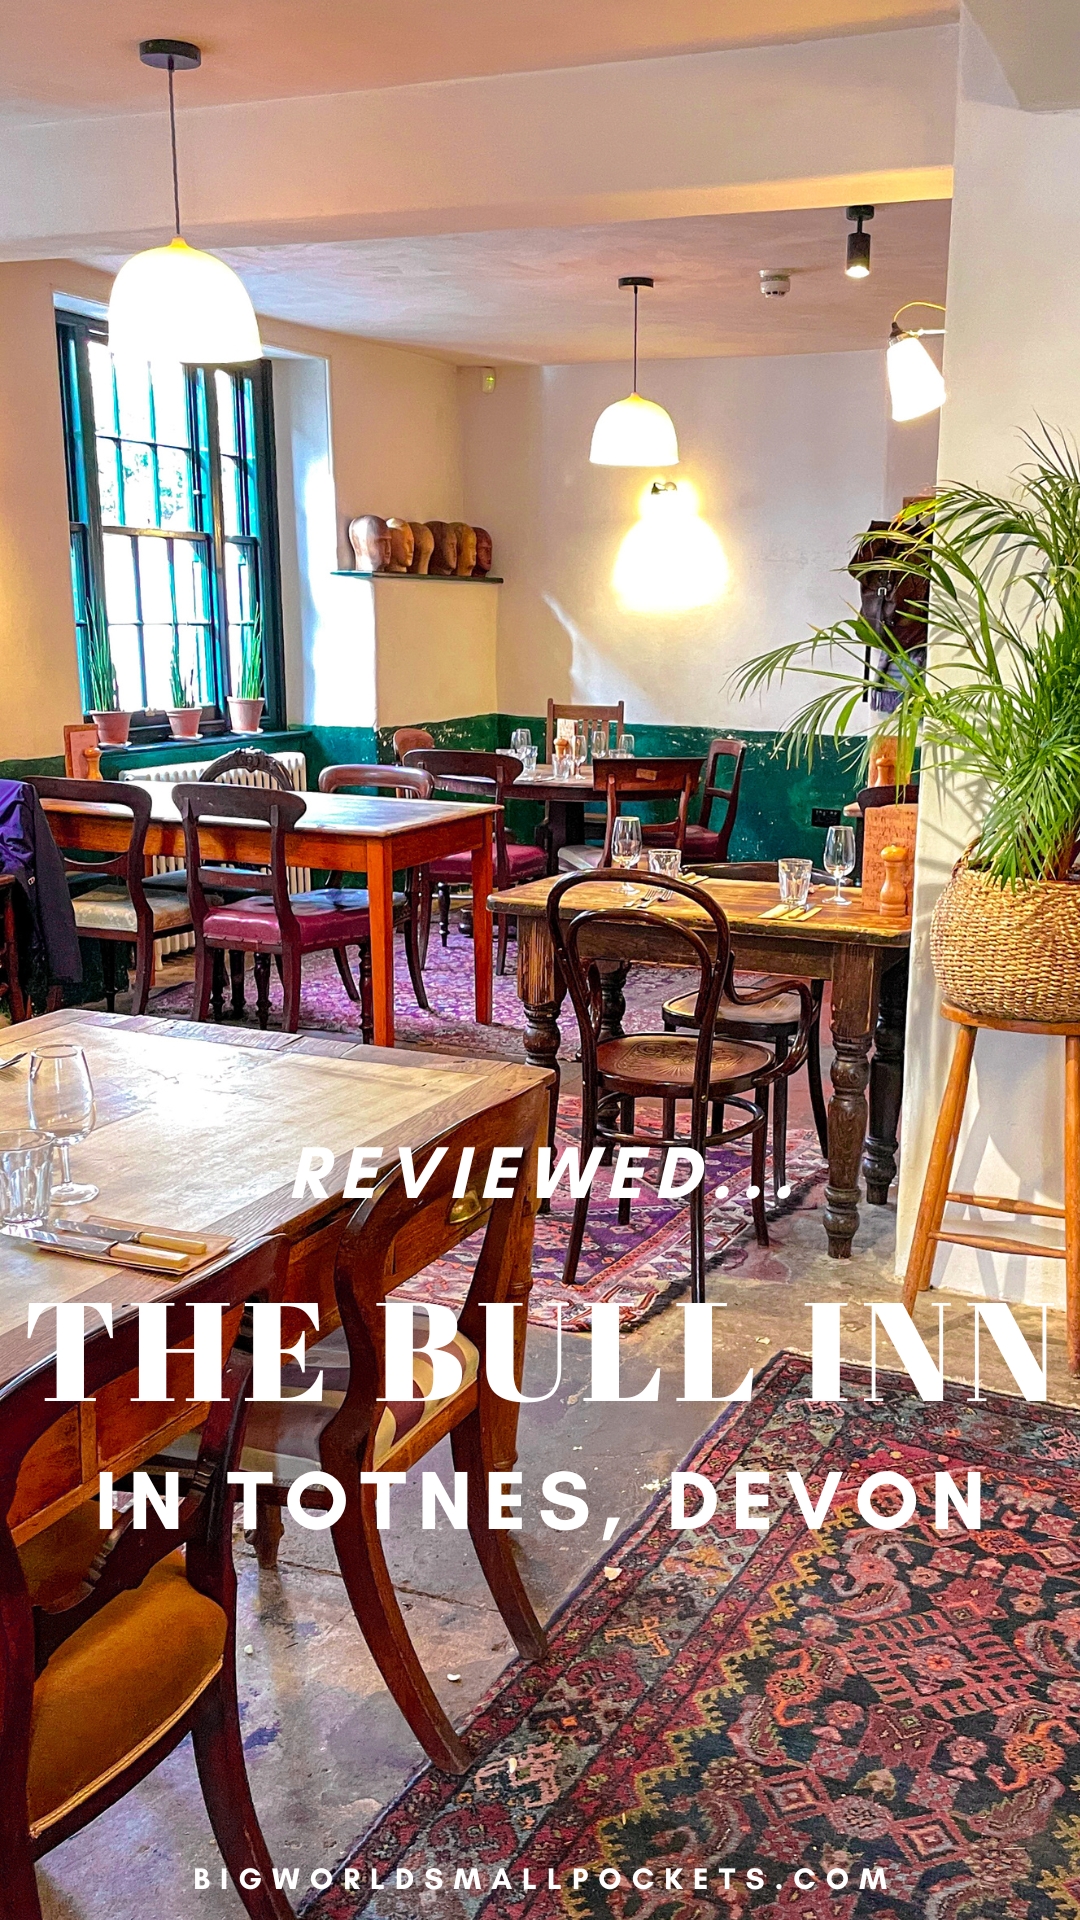 Reviewed - The Bull Inn in Totnes, Devon